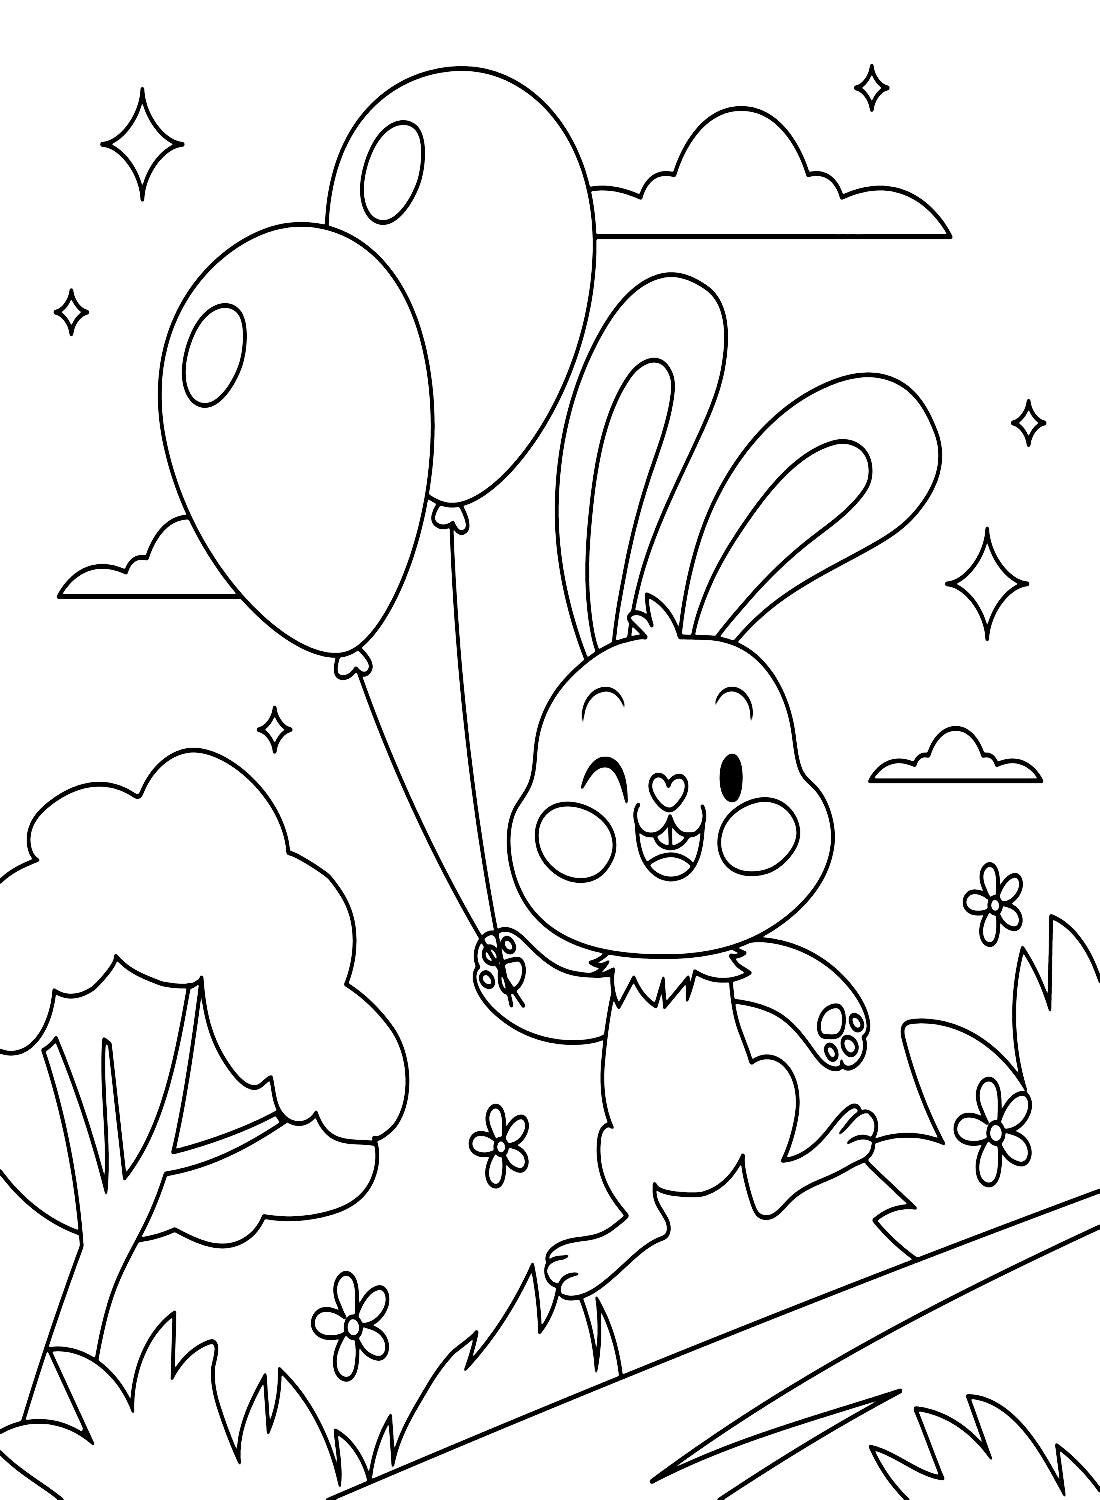 Cartoon Rabbit For Preschool from Rabbit